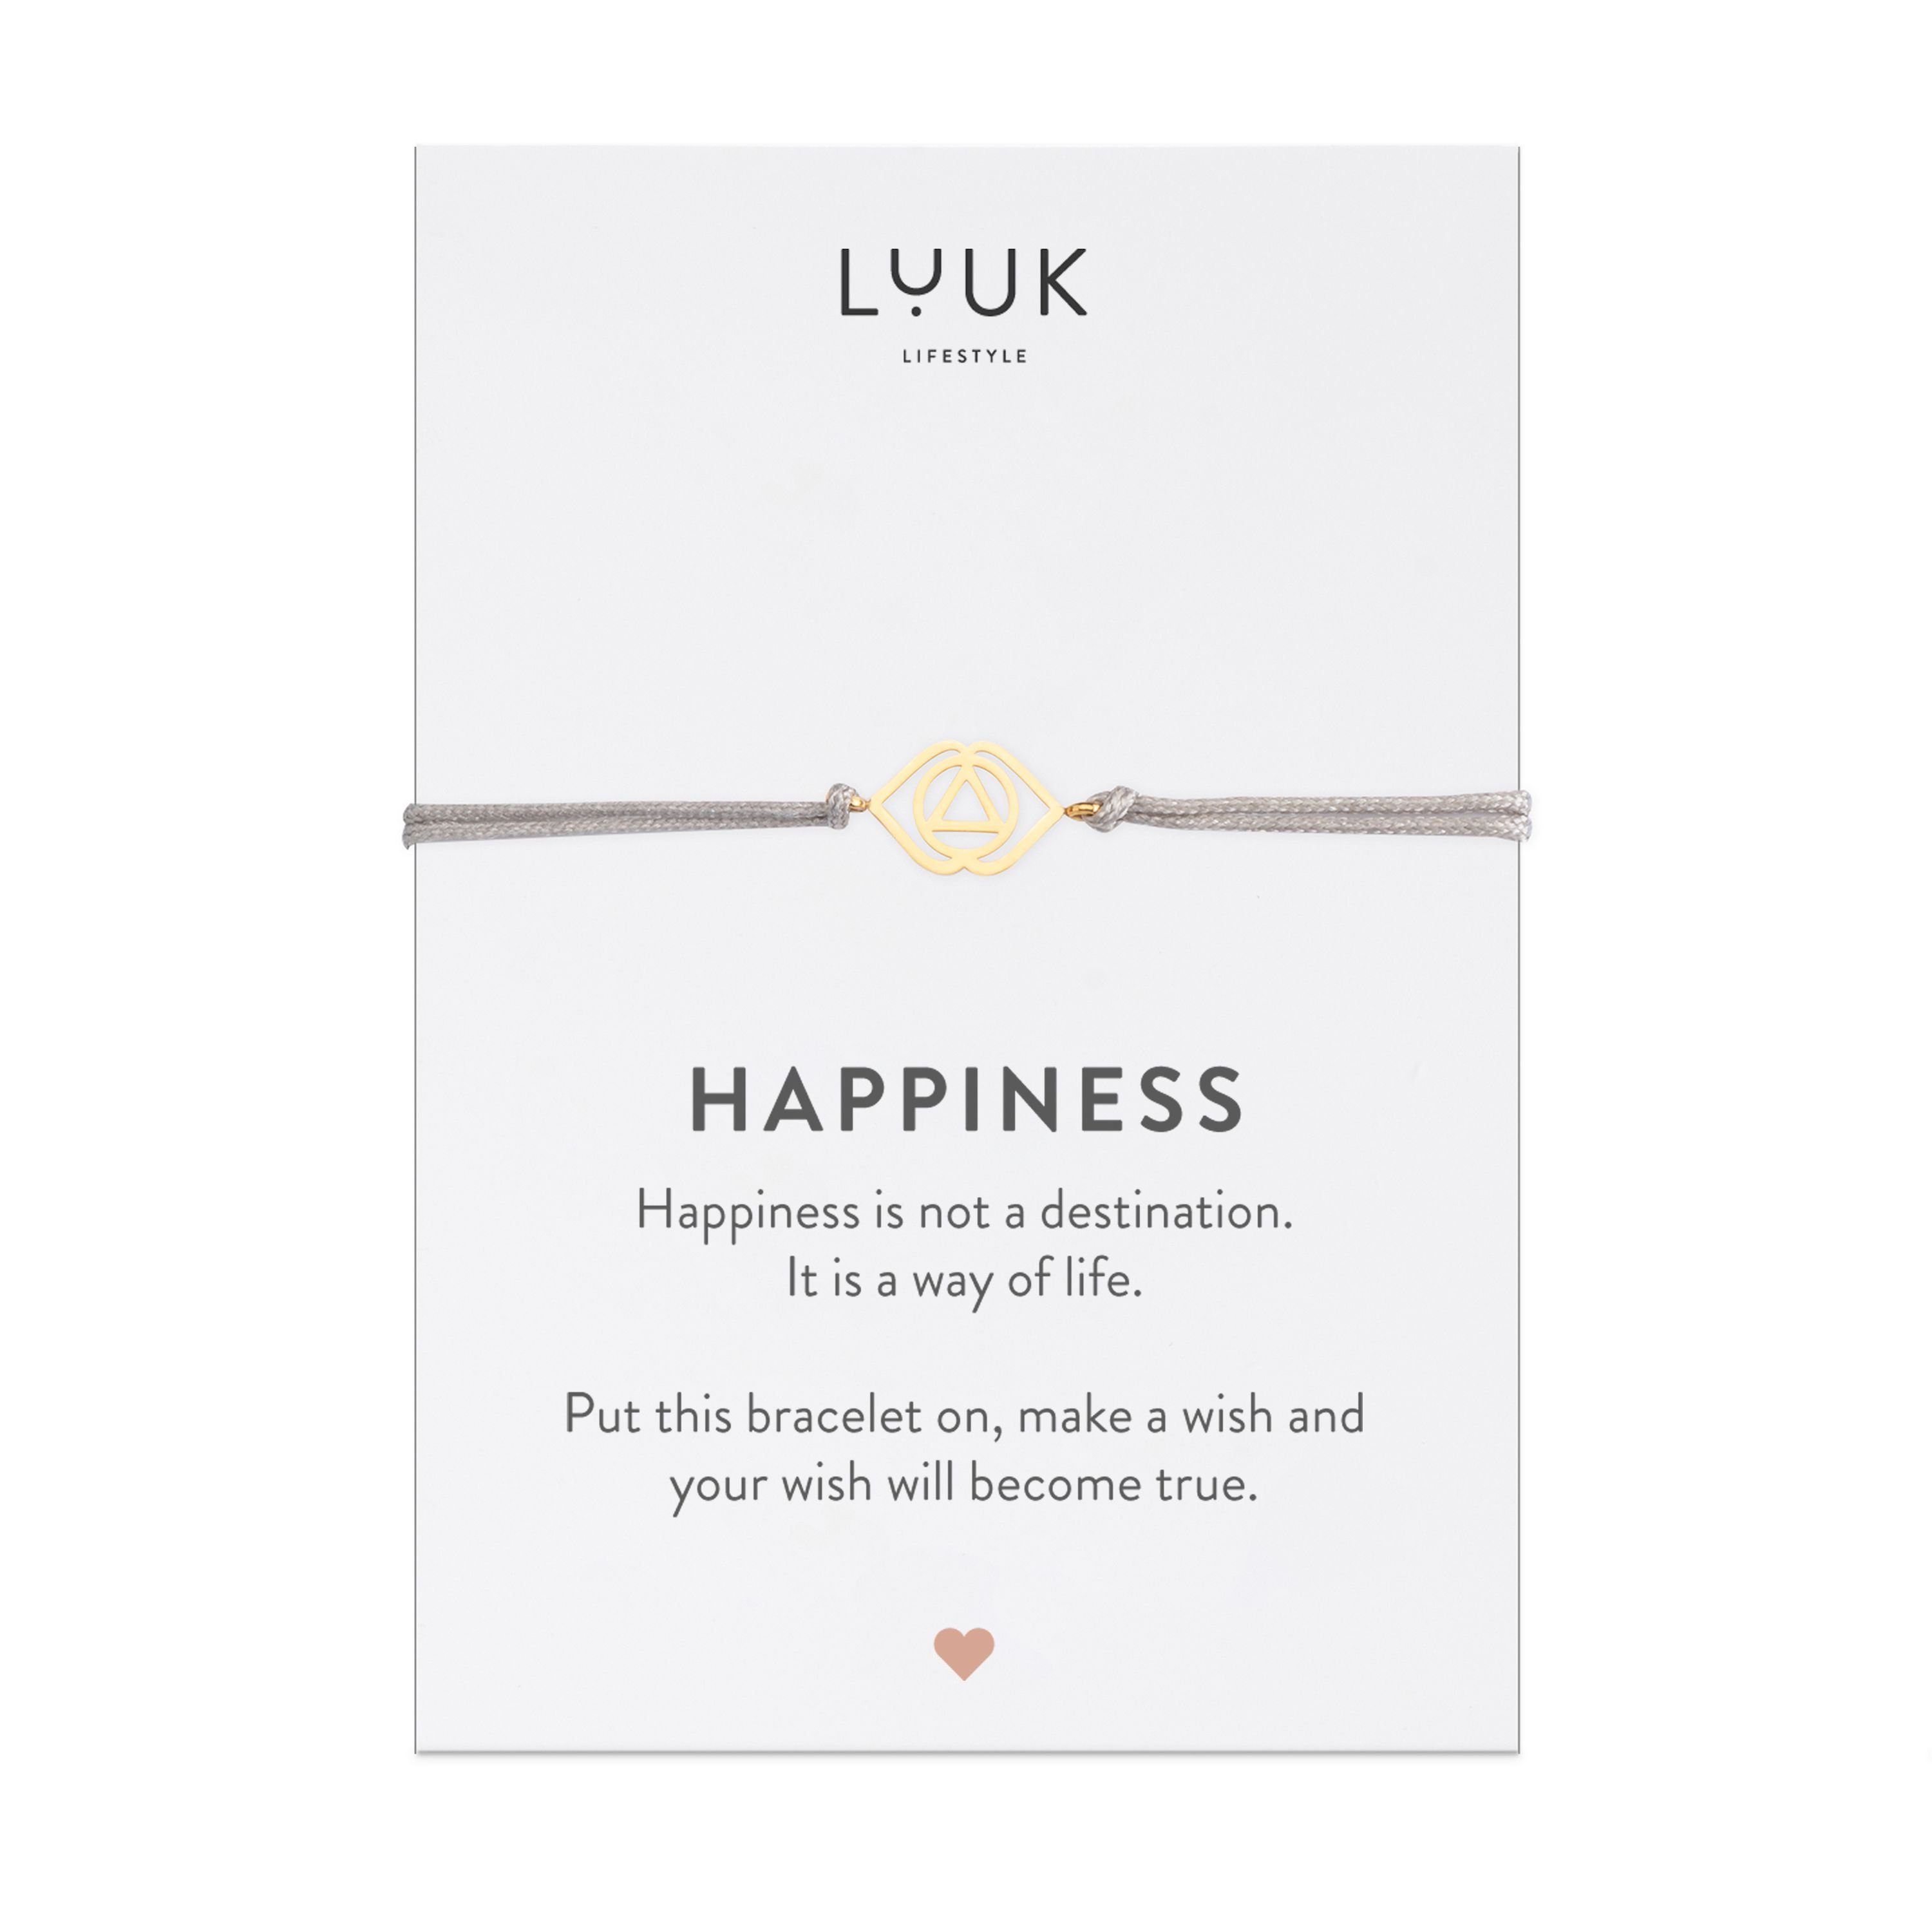 LUUK Happiness LIFESTYLE Freundschaftsarmband mit handmade, Spruchkarte Dreieck,